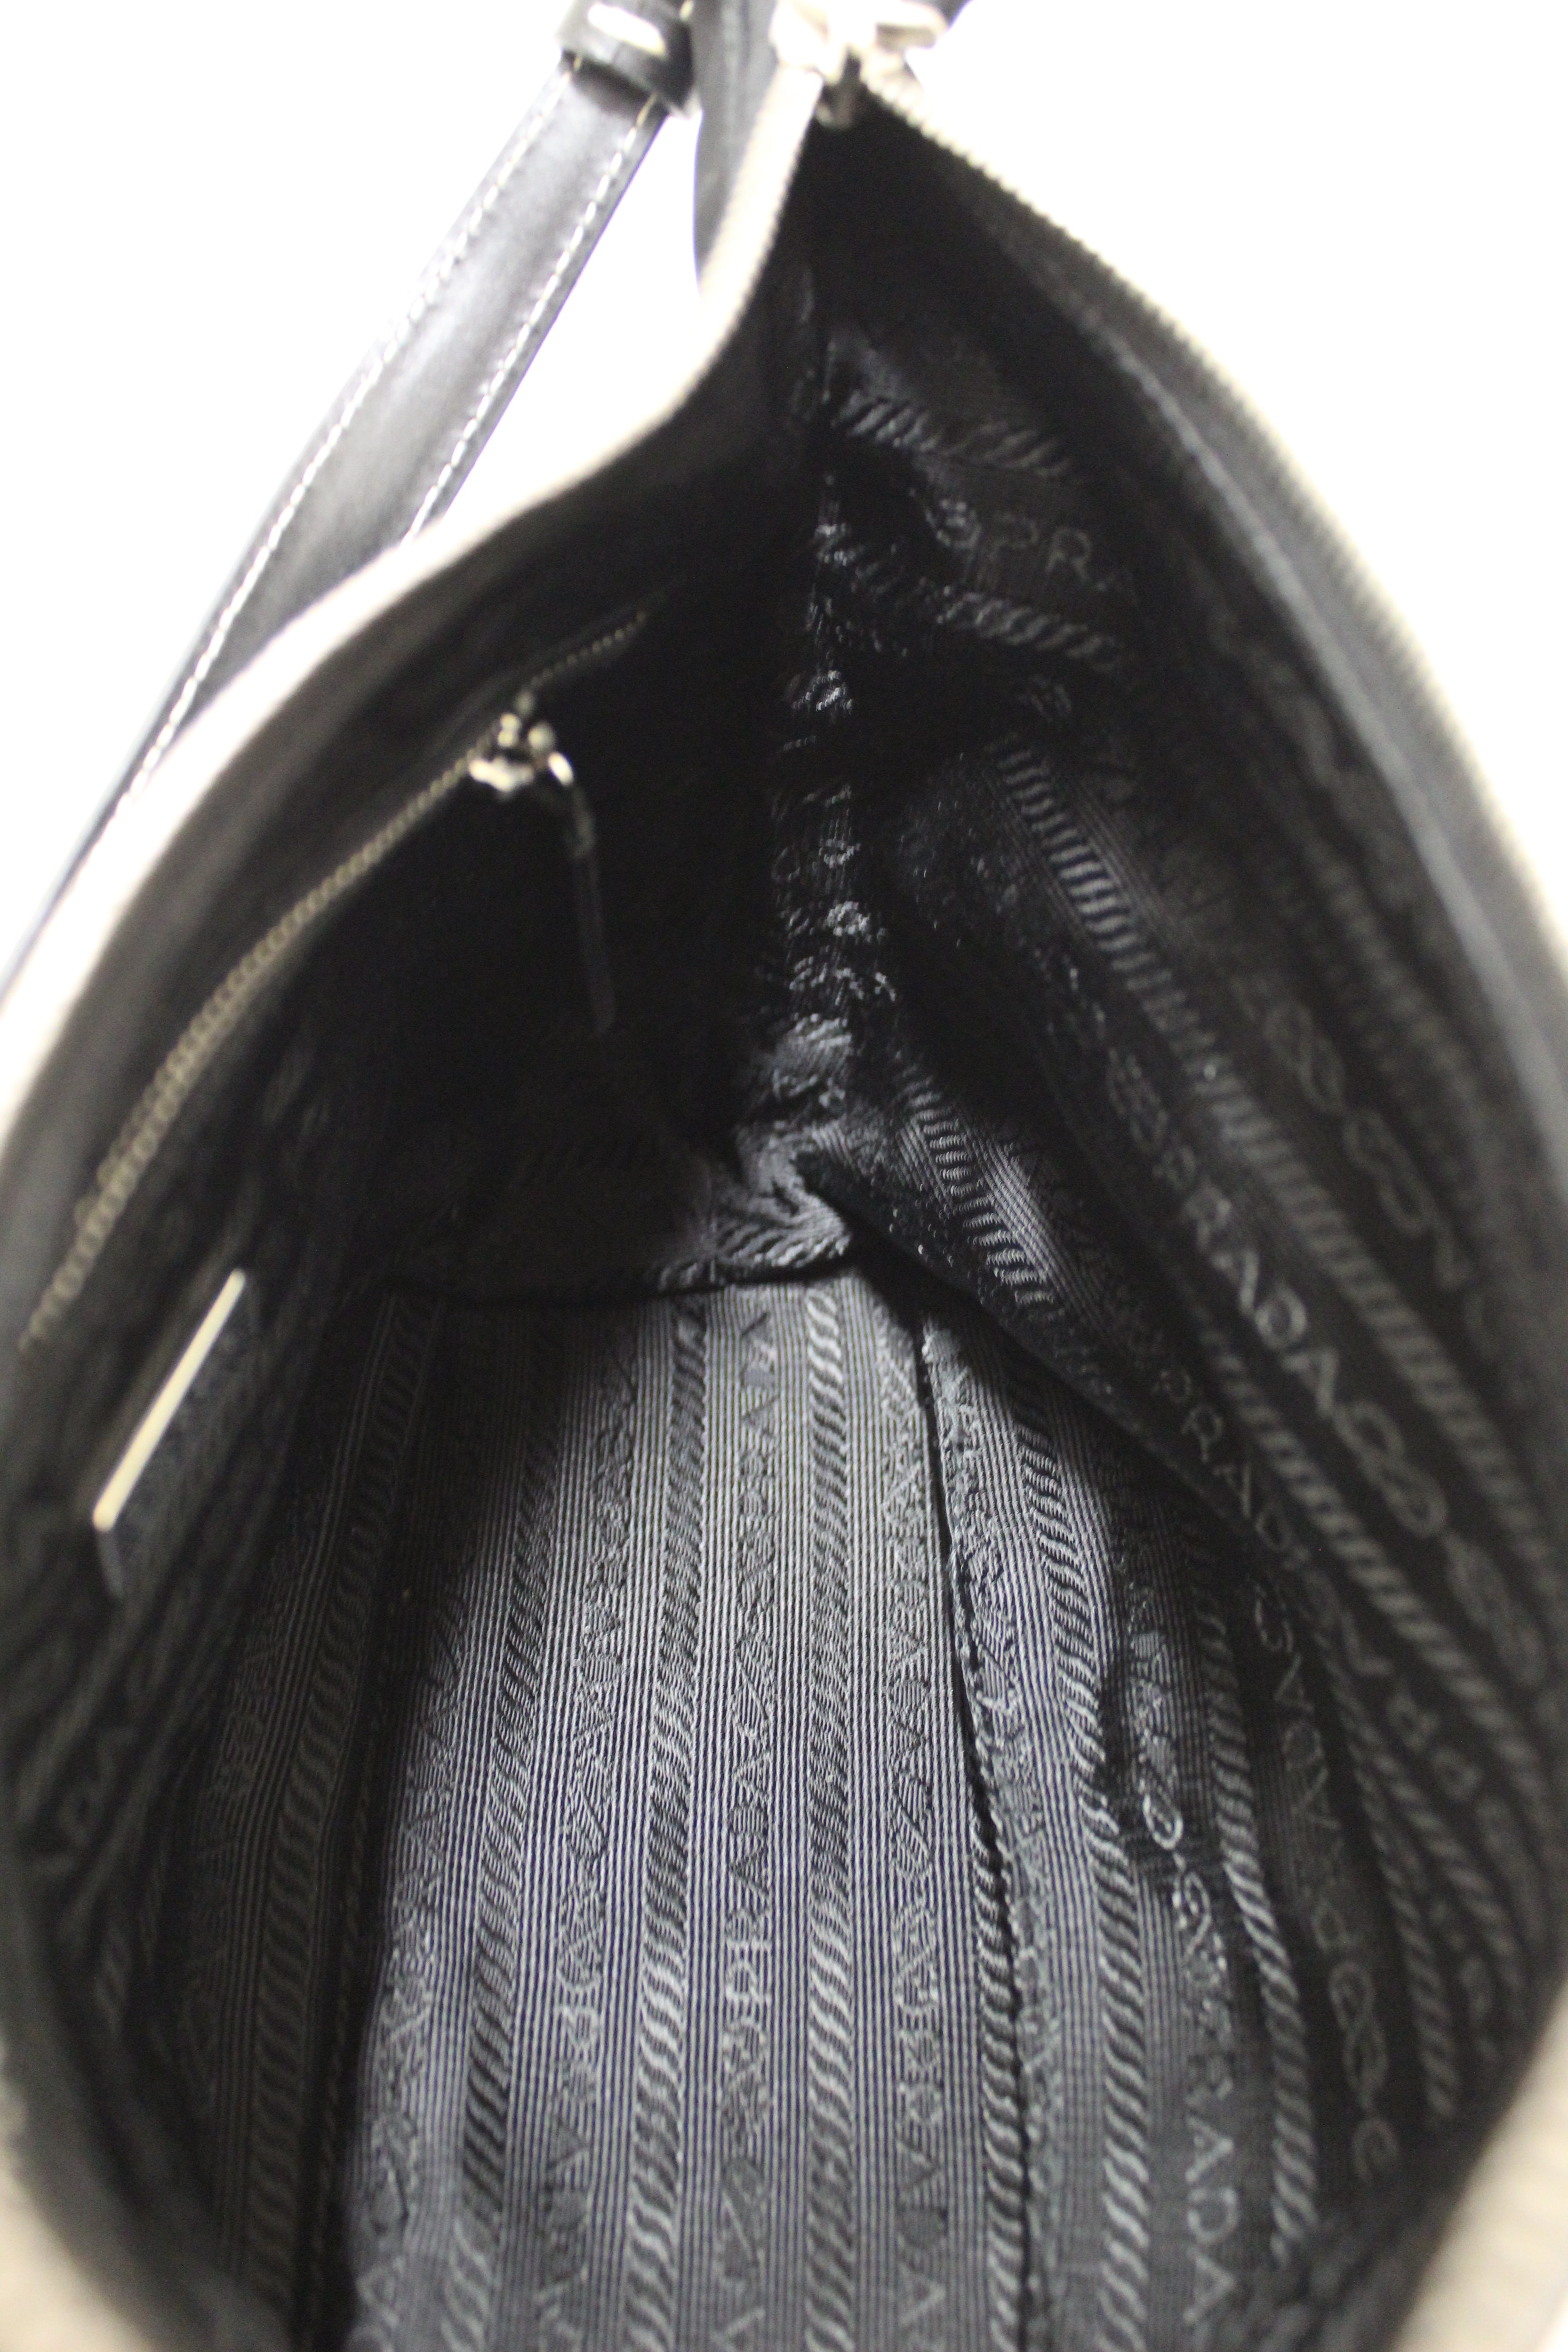 Authentic Prada Black Tessuto Soft Calf Leather And Nylon Mini Hobo Shoulder Bag